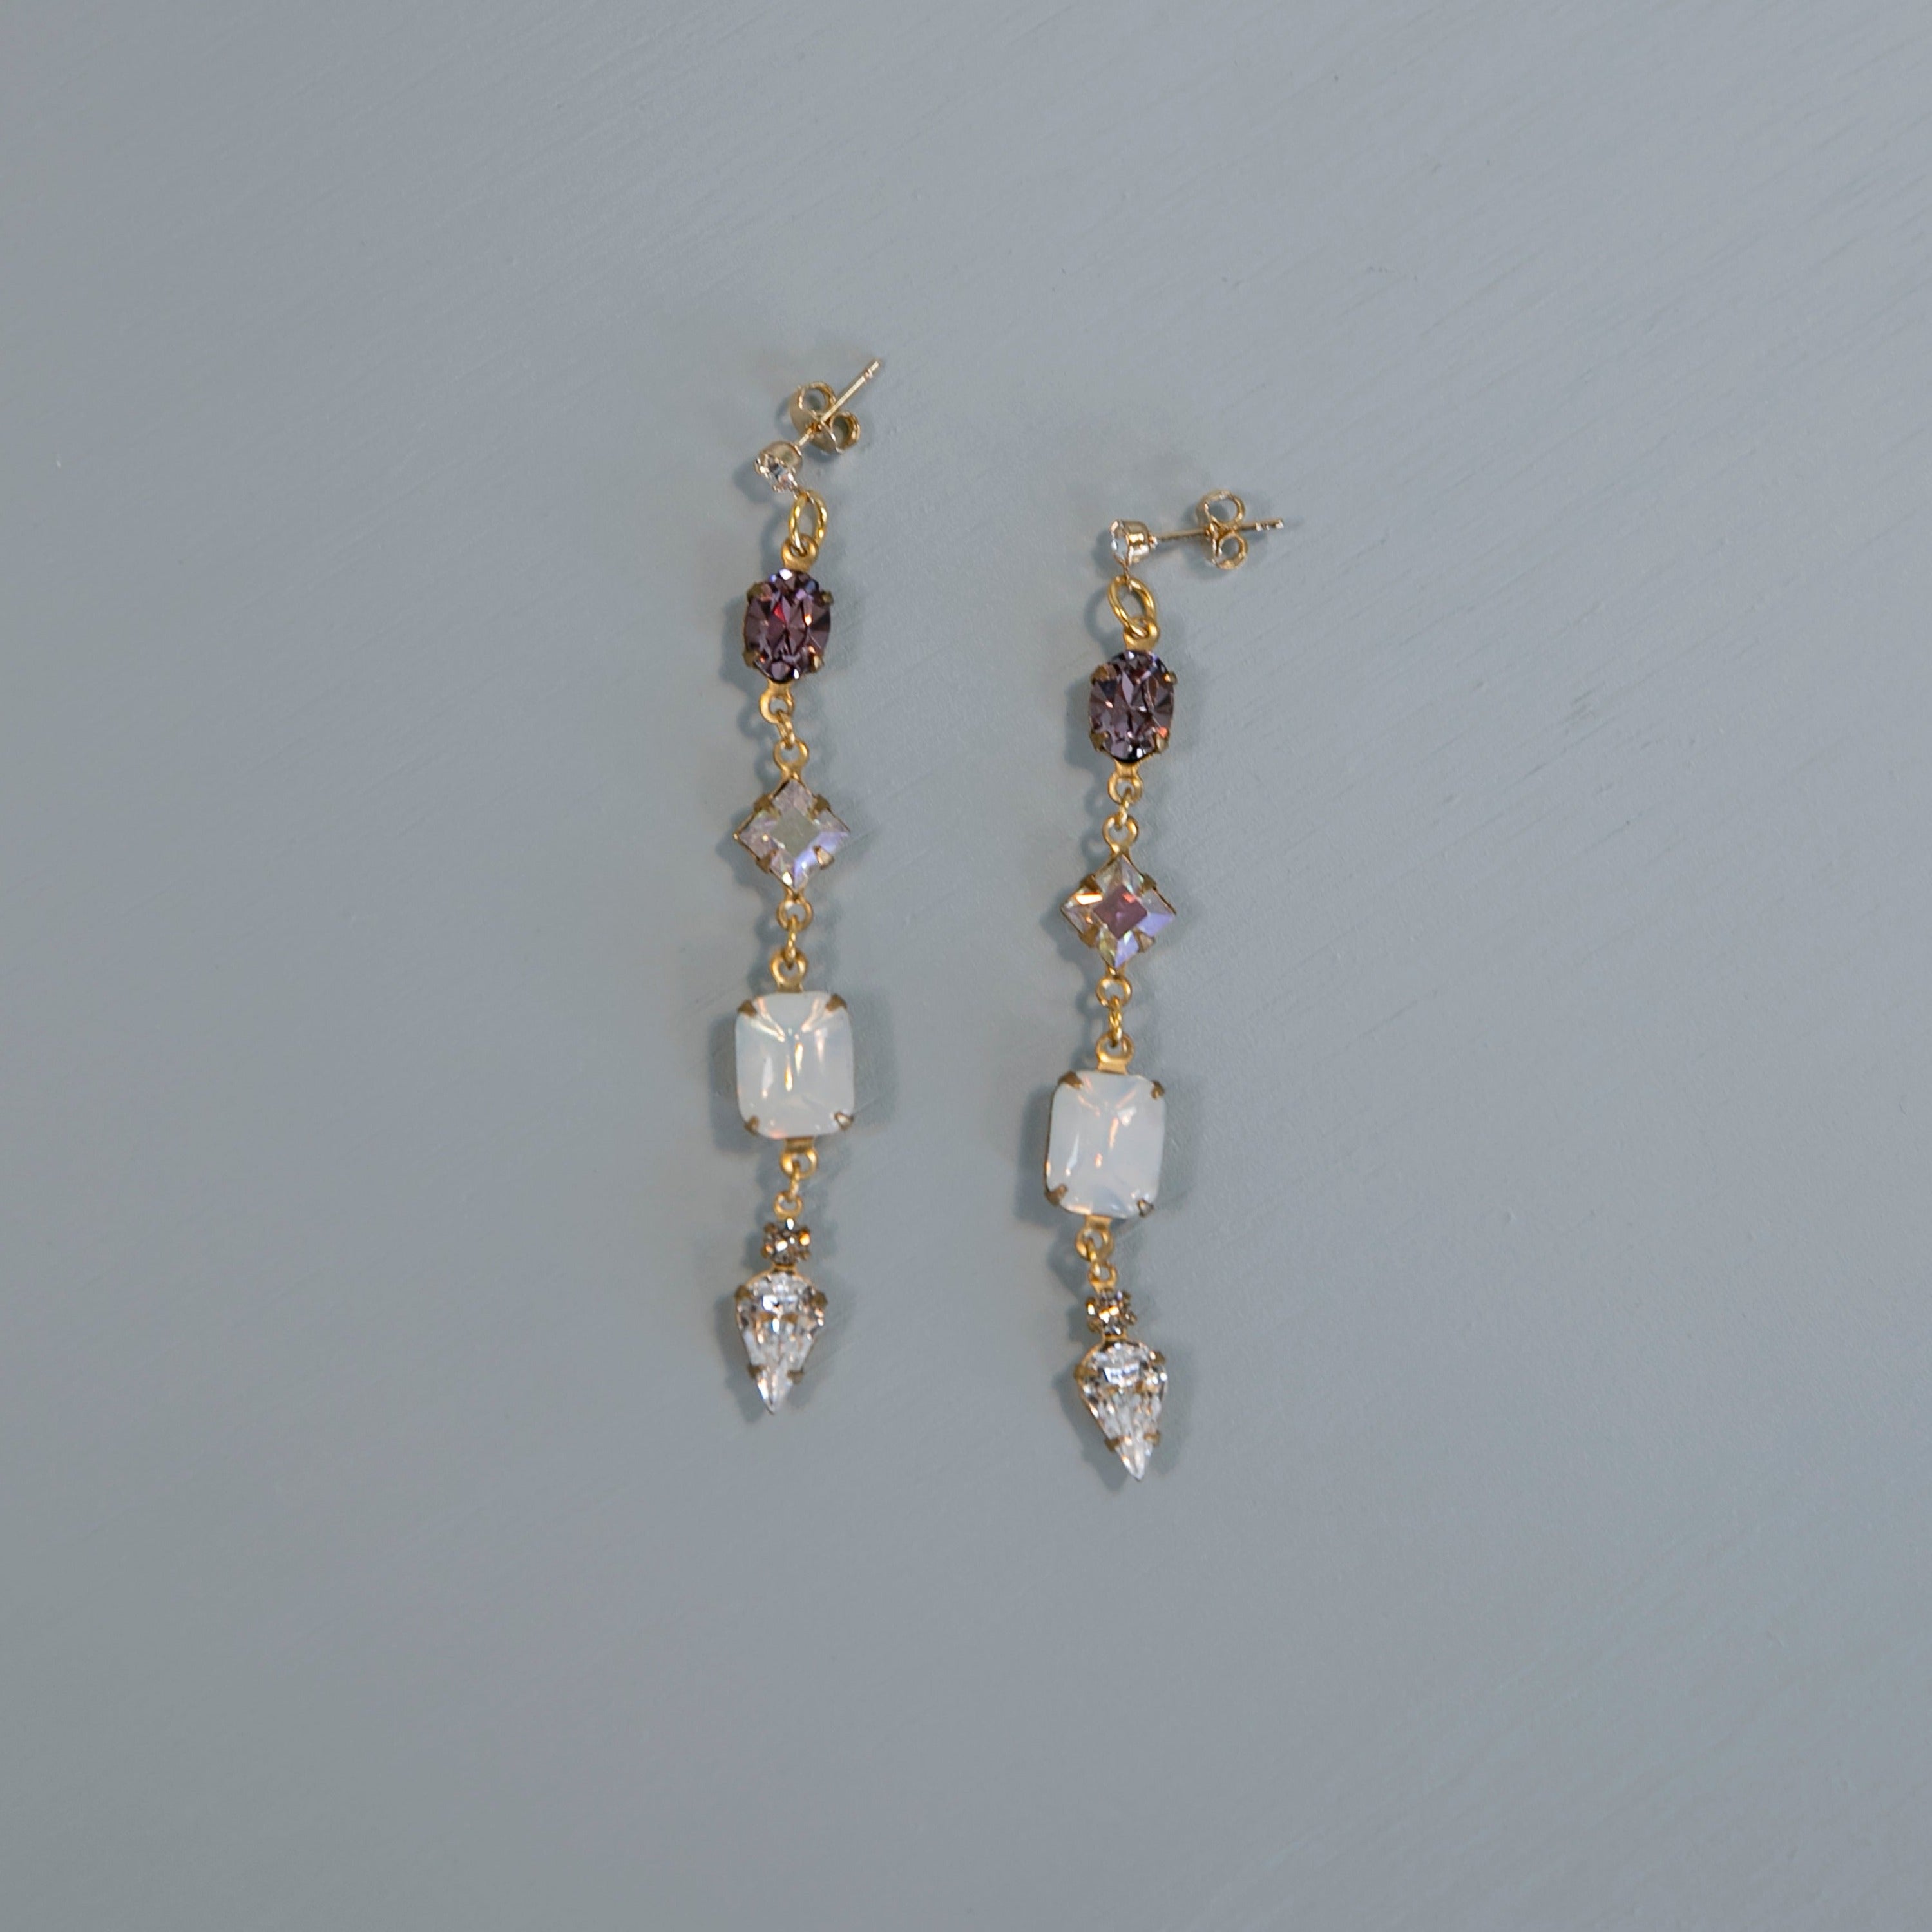 Sylvia - Swarovski Drop Earrings - amethyst and white